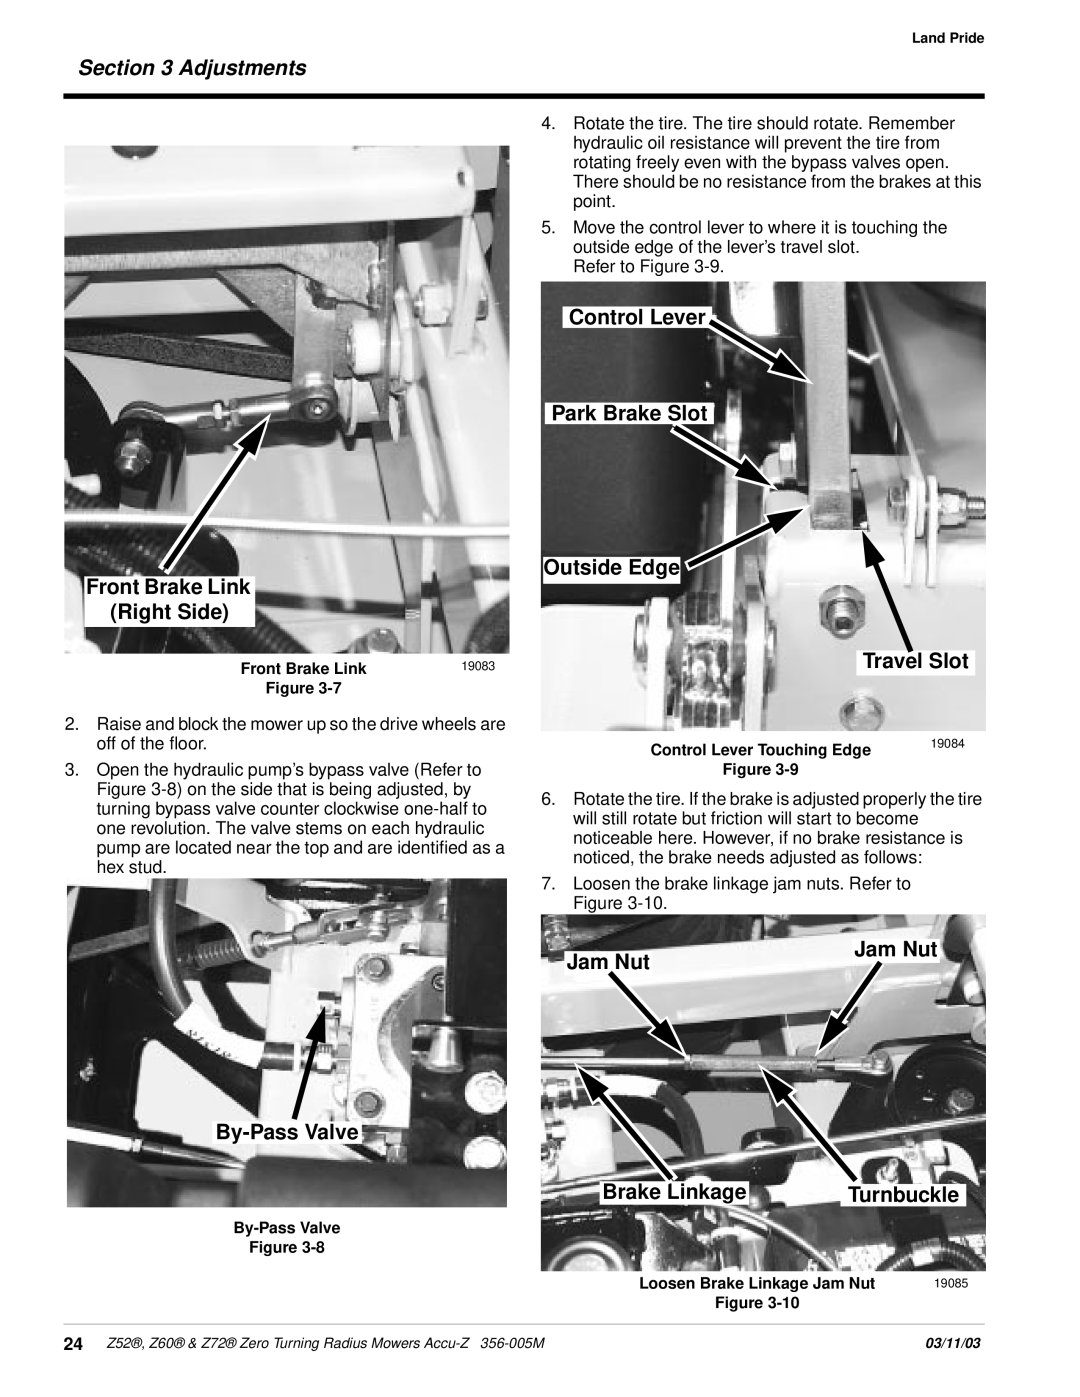 Land Pride Z60 Front Brake Link Right Side, Control Lever Park Brake Slot Outside Edge, Travel Slot, By-PassValve, Jam Nut 